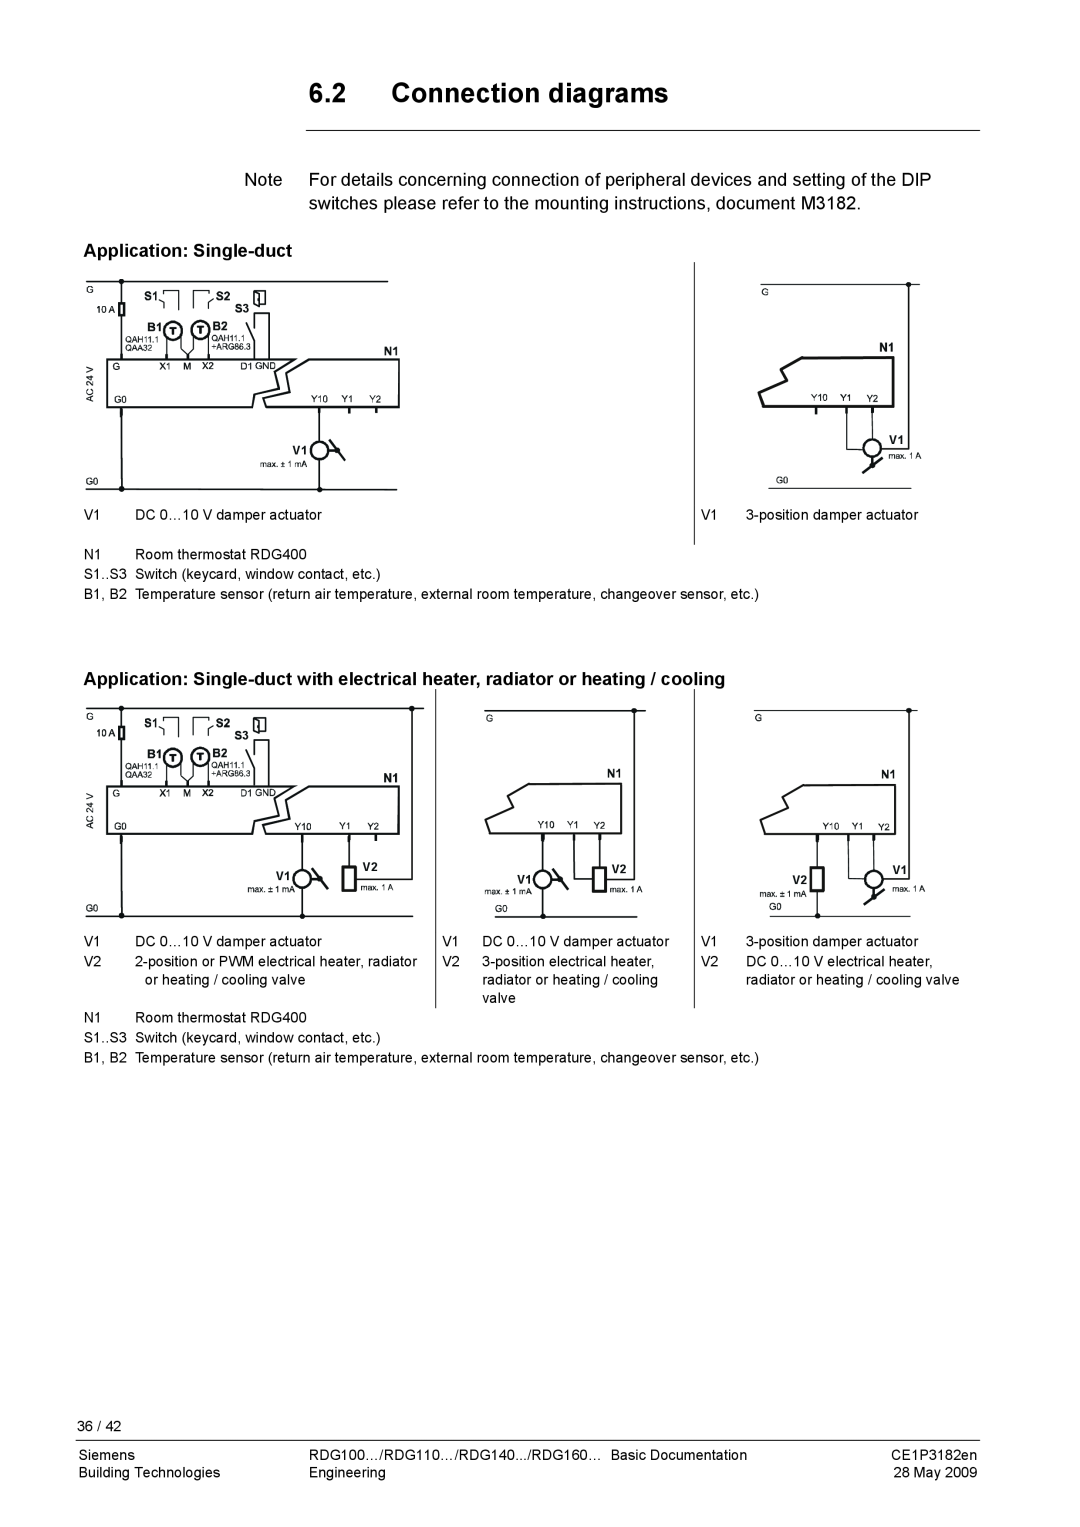 Siemens RDG400 manual 6.2Connection diagrams, Application Single-duct 